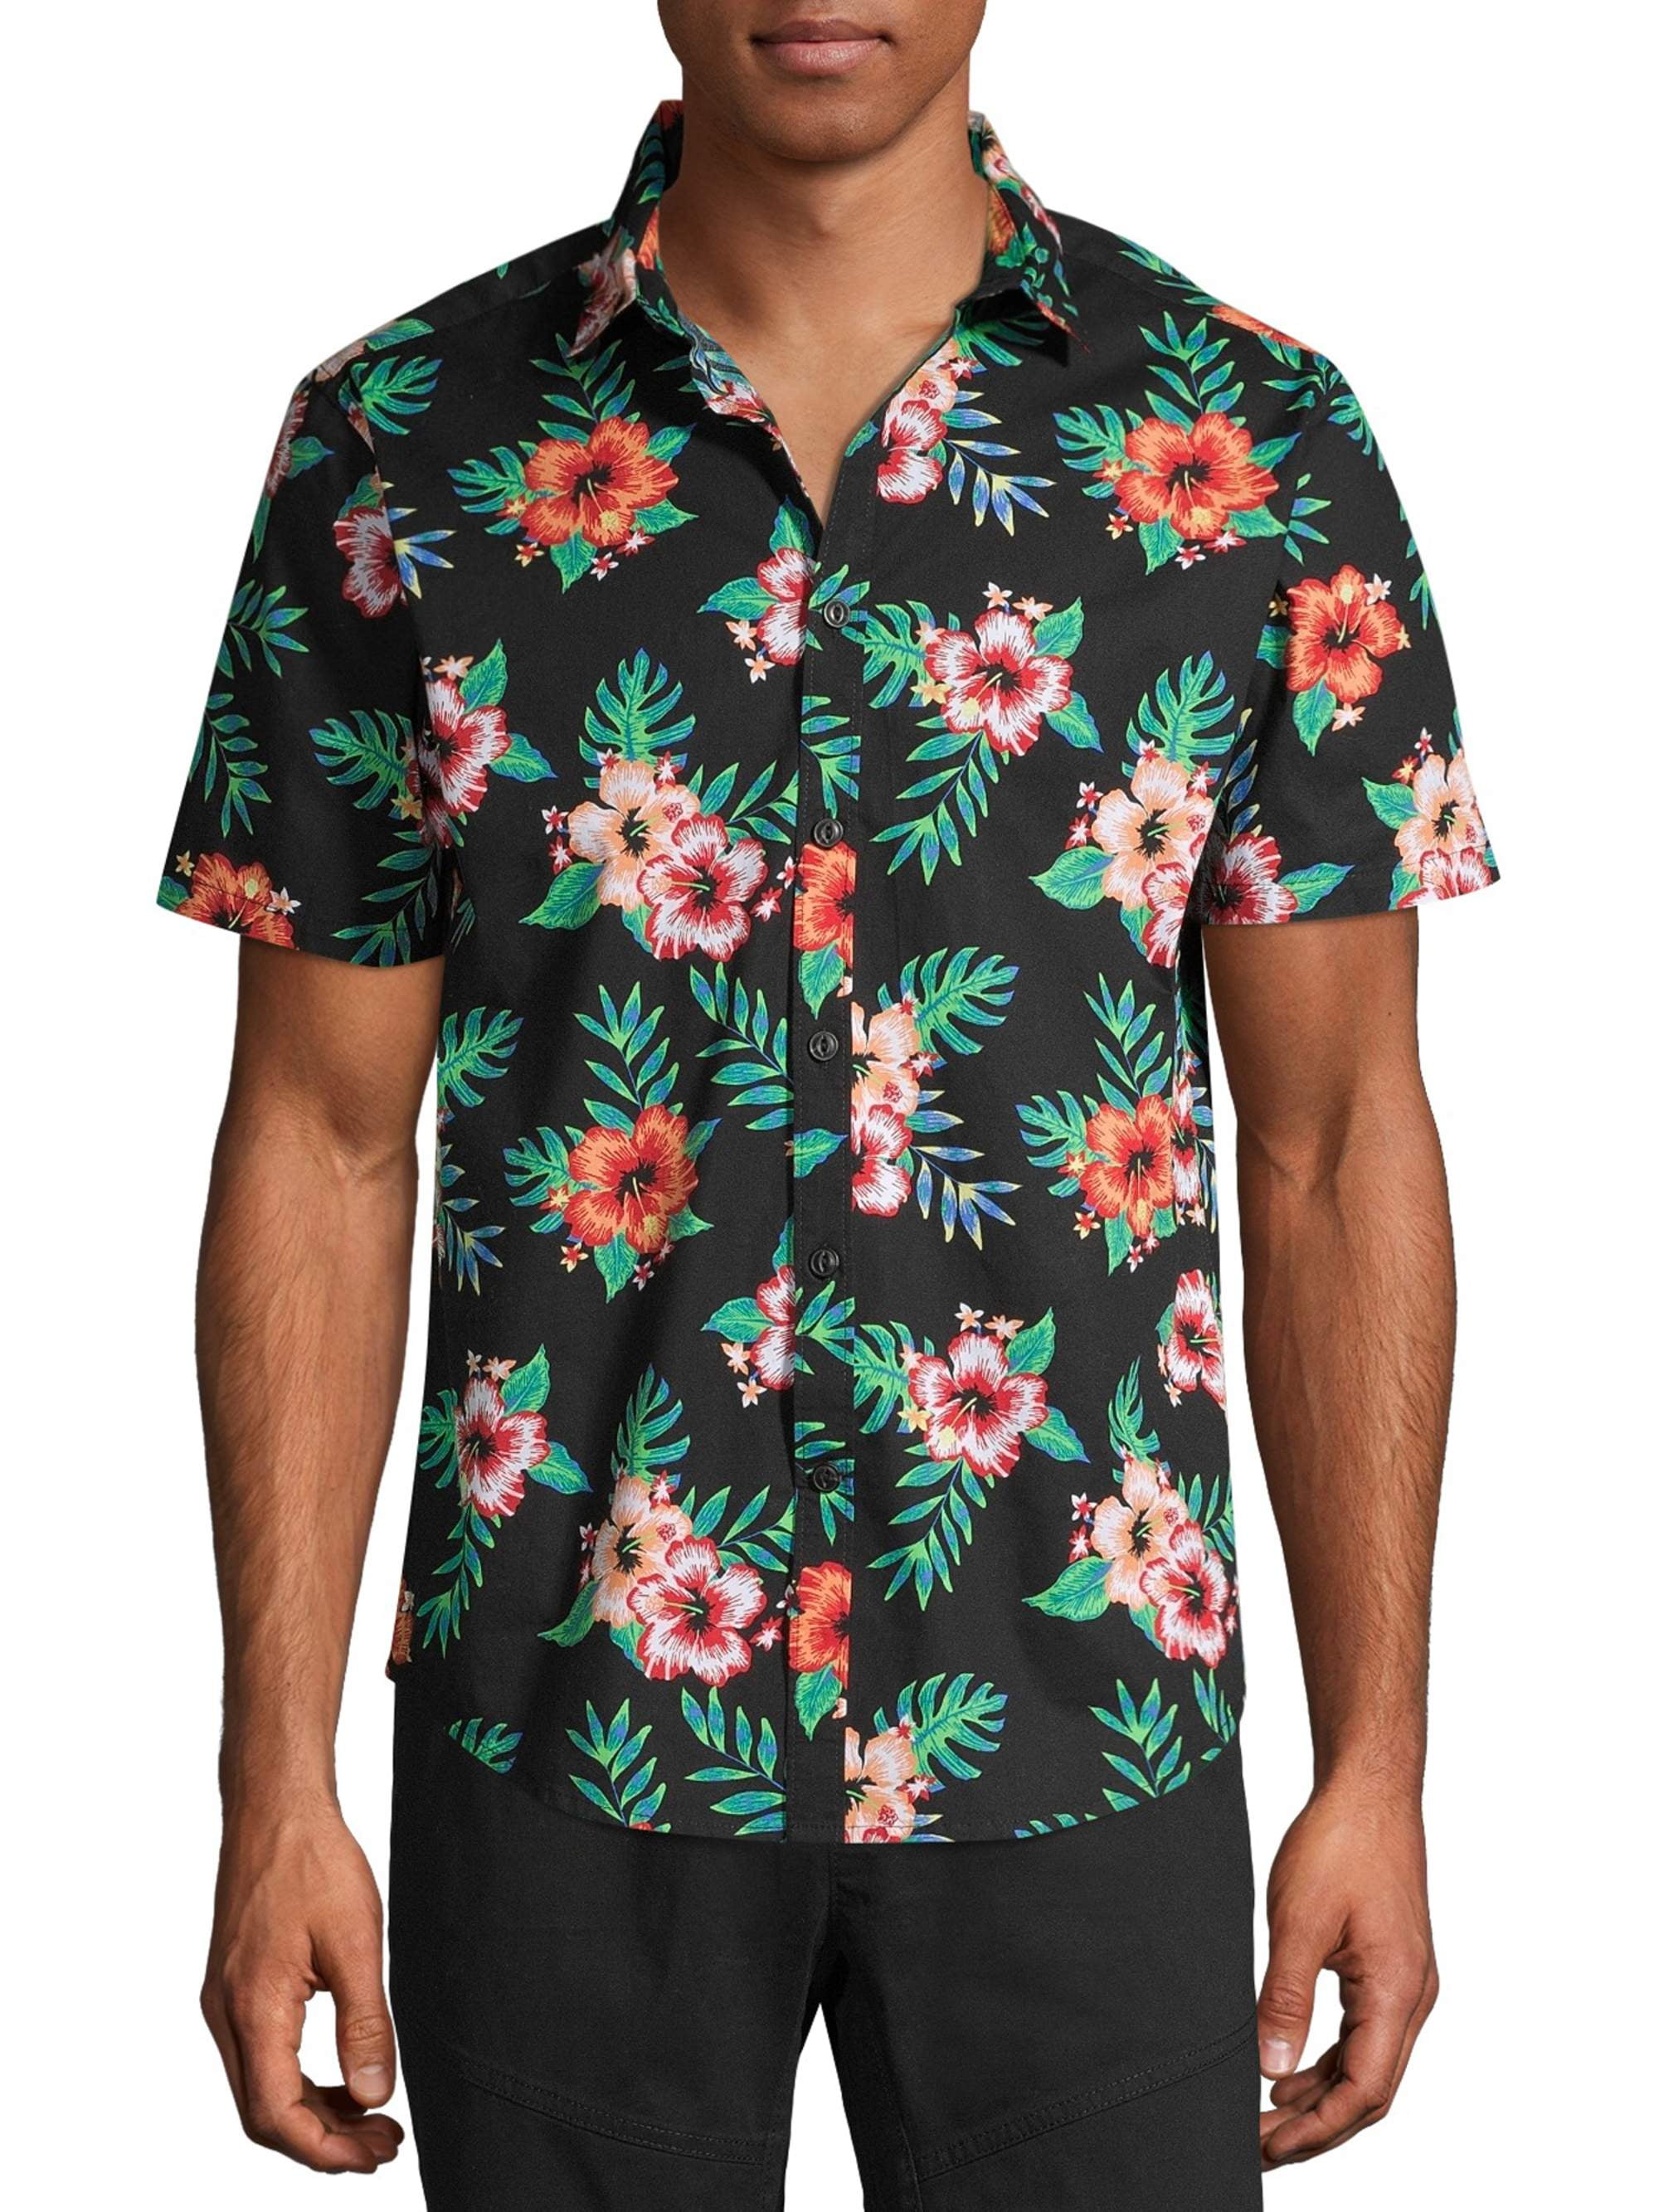 PIZZ ANNU Mens Summer Big Size Print Short Sleeve Casual Tropical Hawaiian Shirts